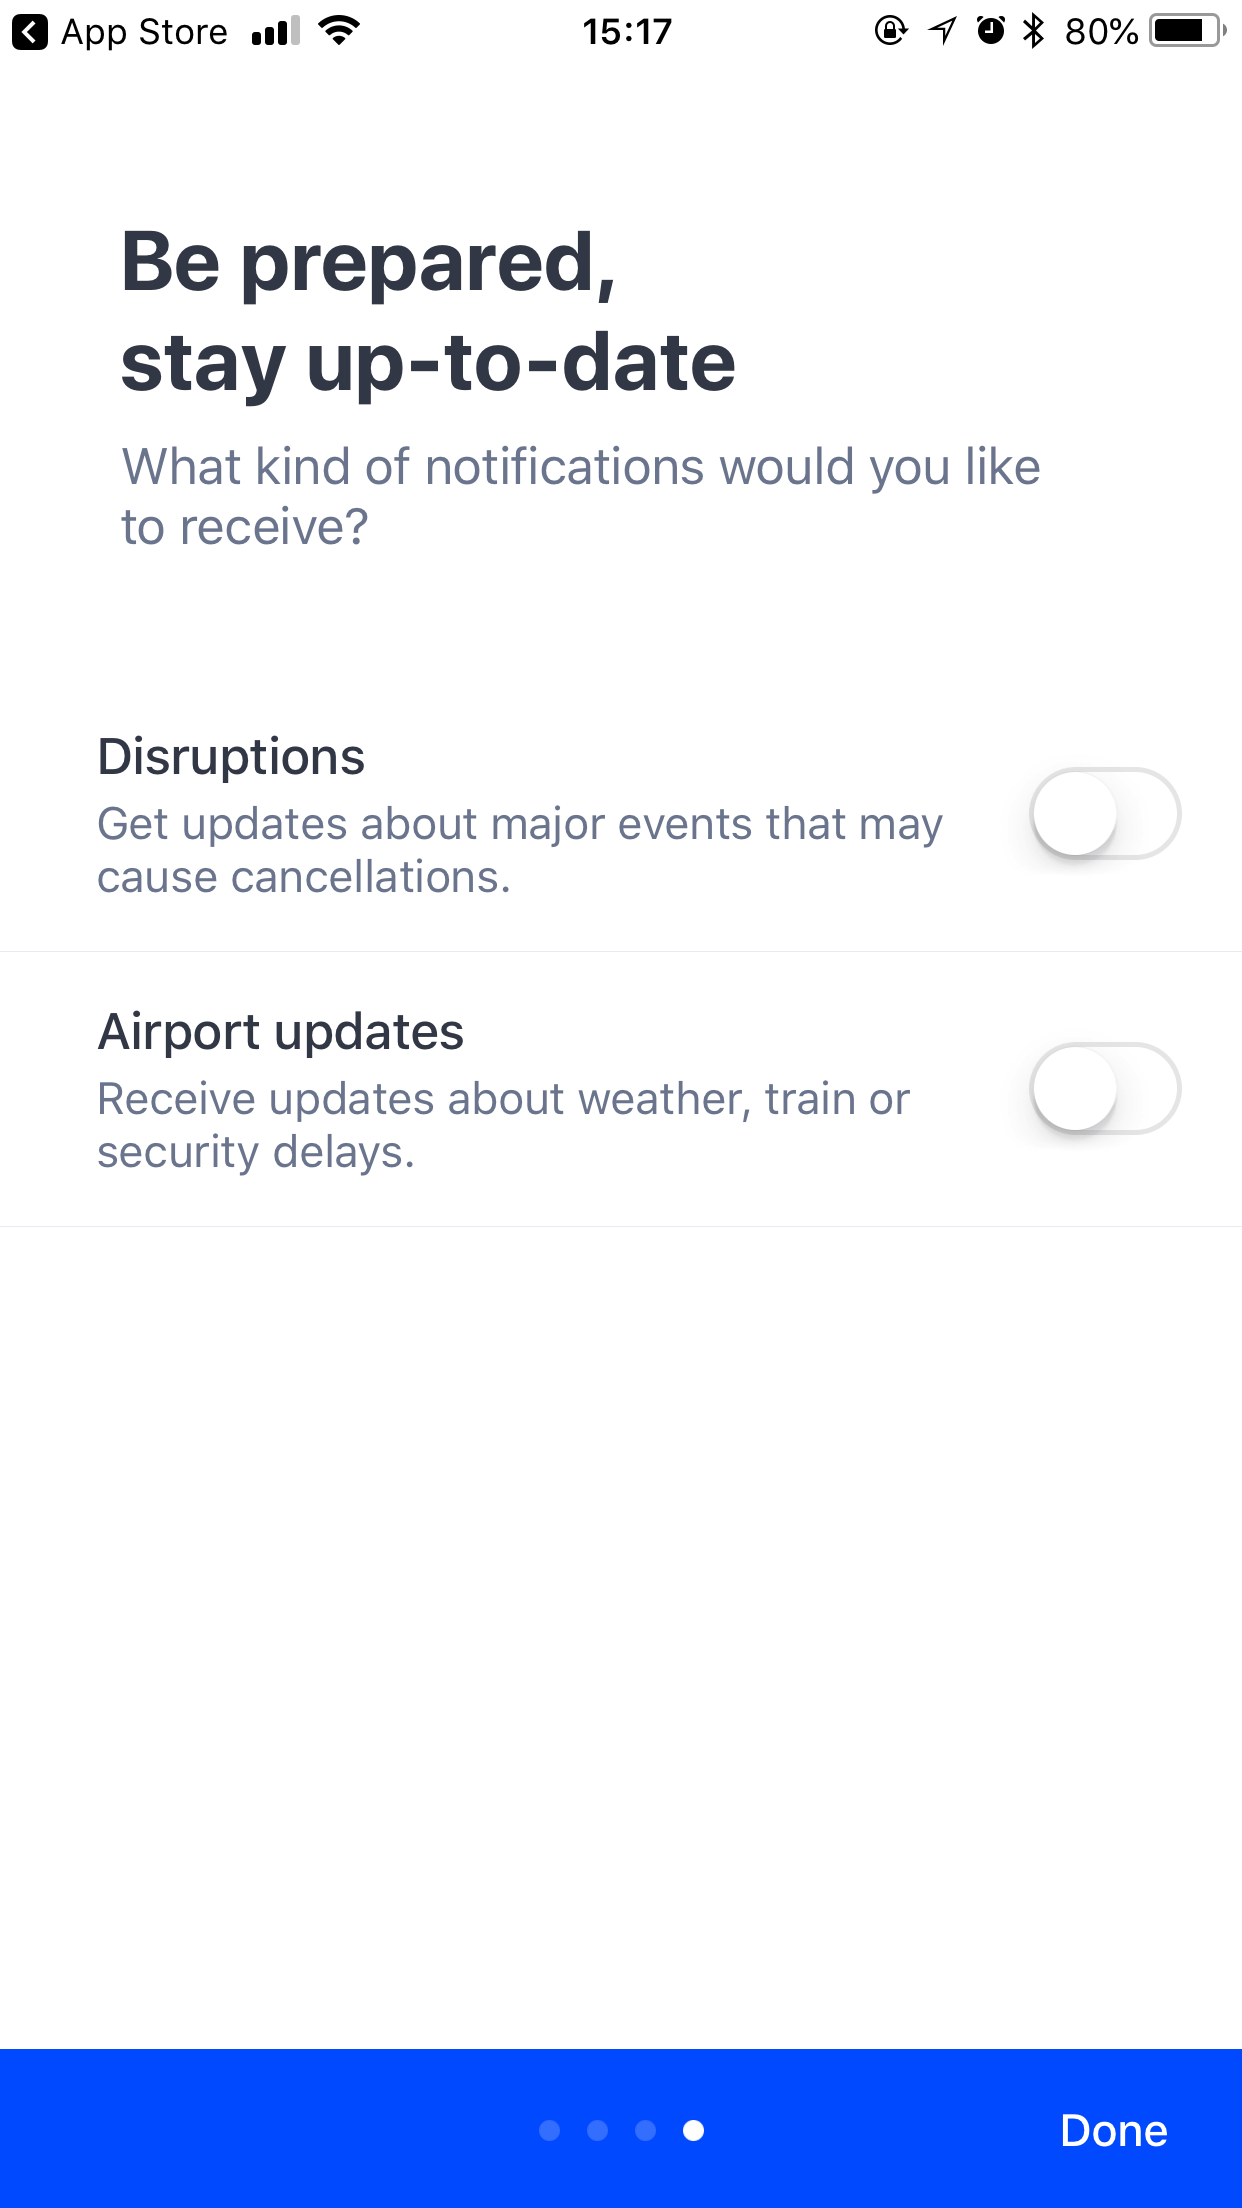 Schiphol Mobile App Notification Preferences